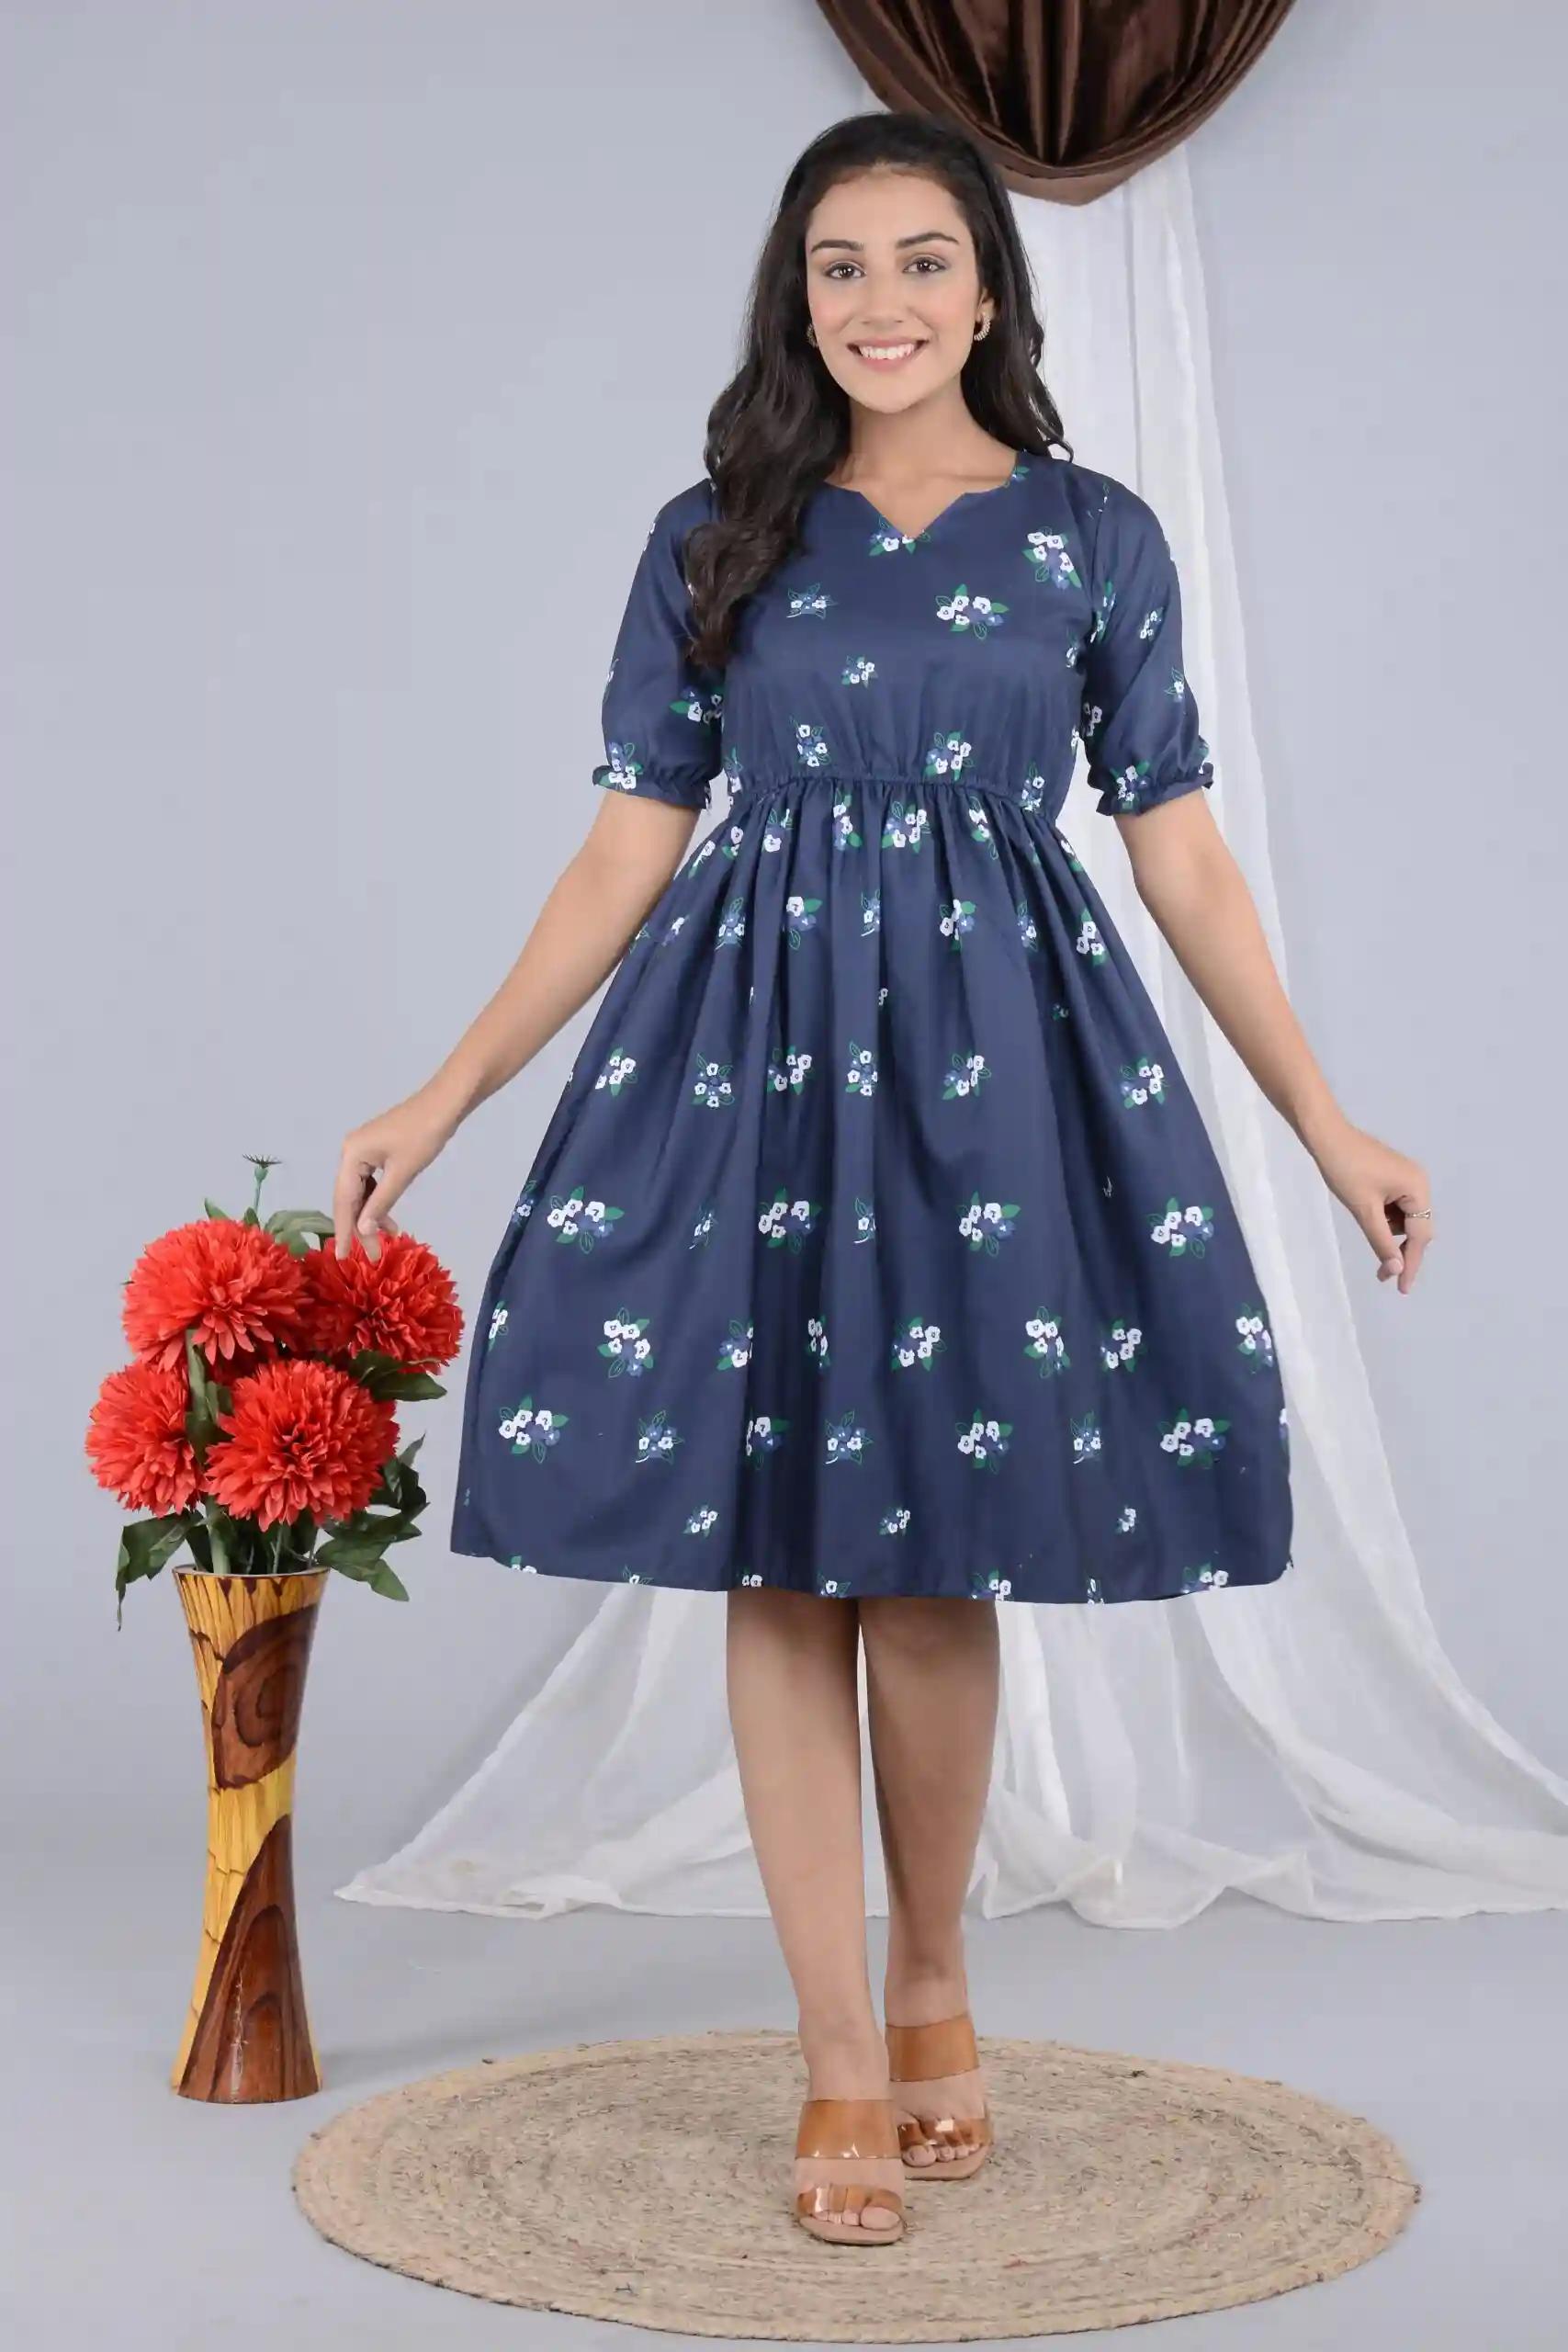 Floral Print Knee Length Navy Blue Dress for Women - S